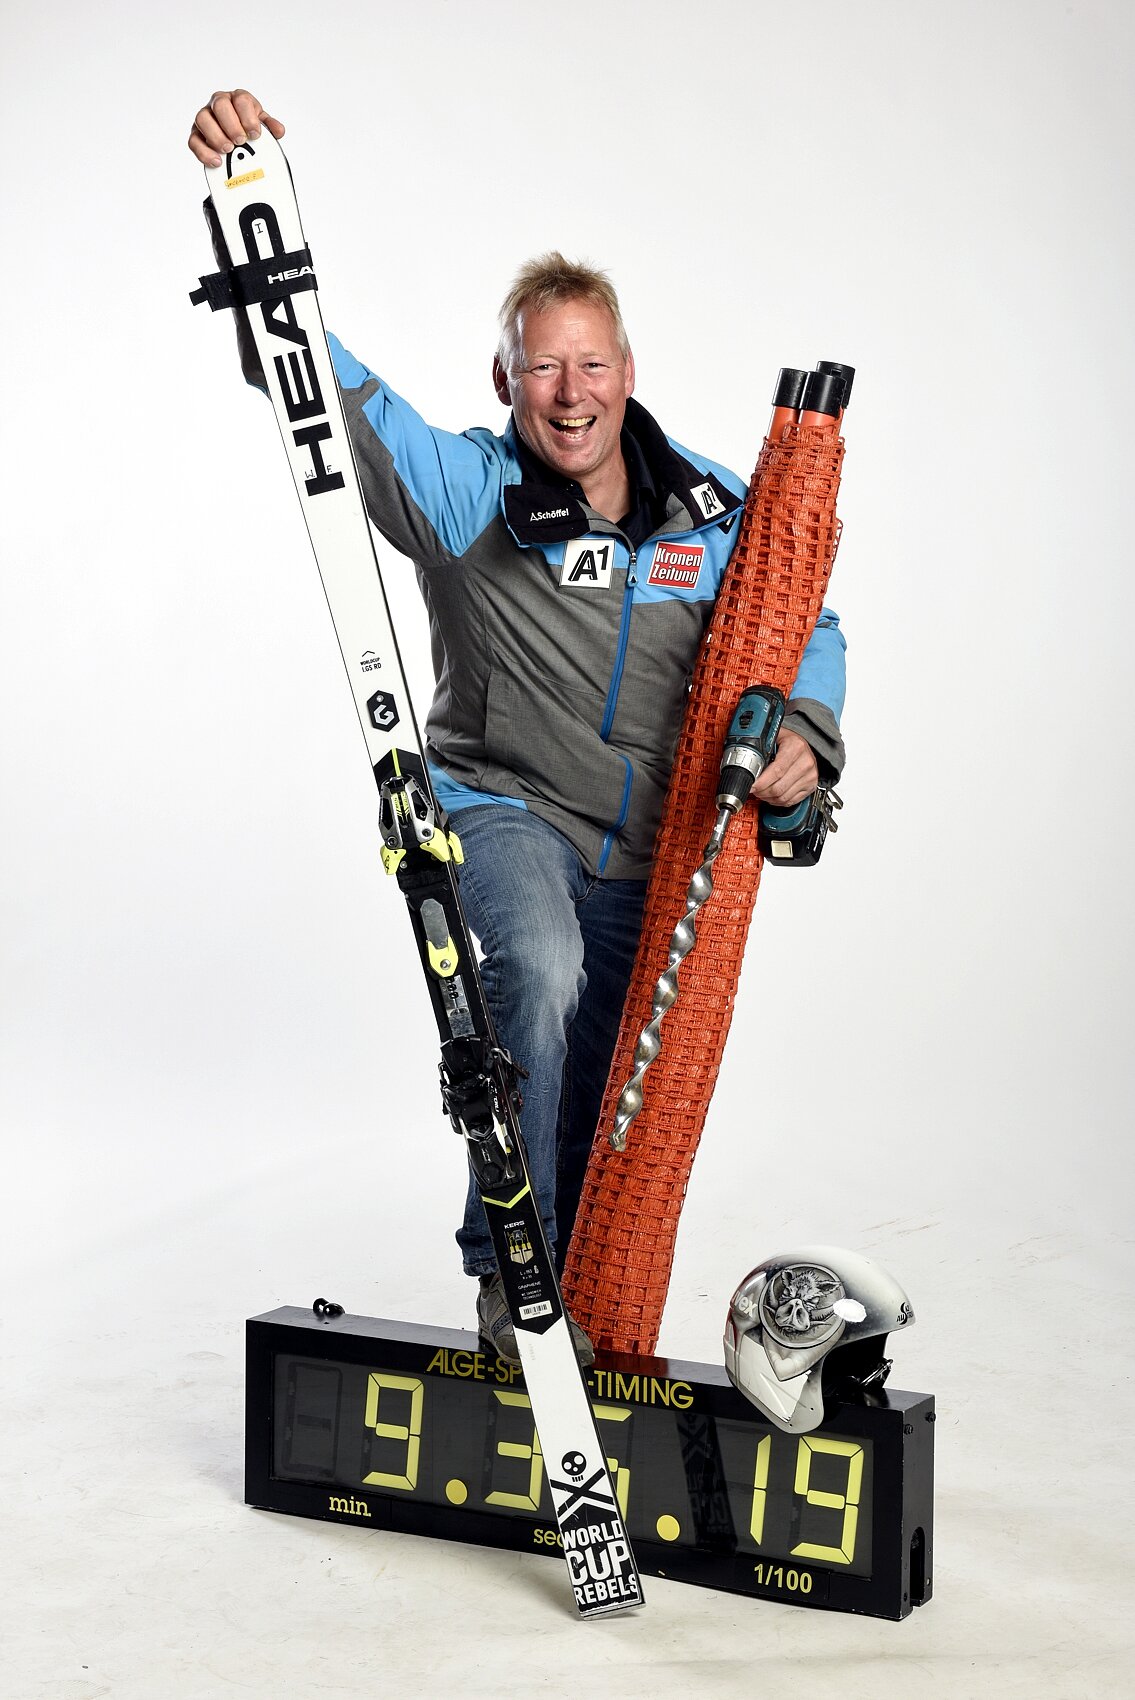 SV Weißbriach / Ski: Werner Franz Senior